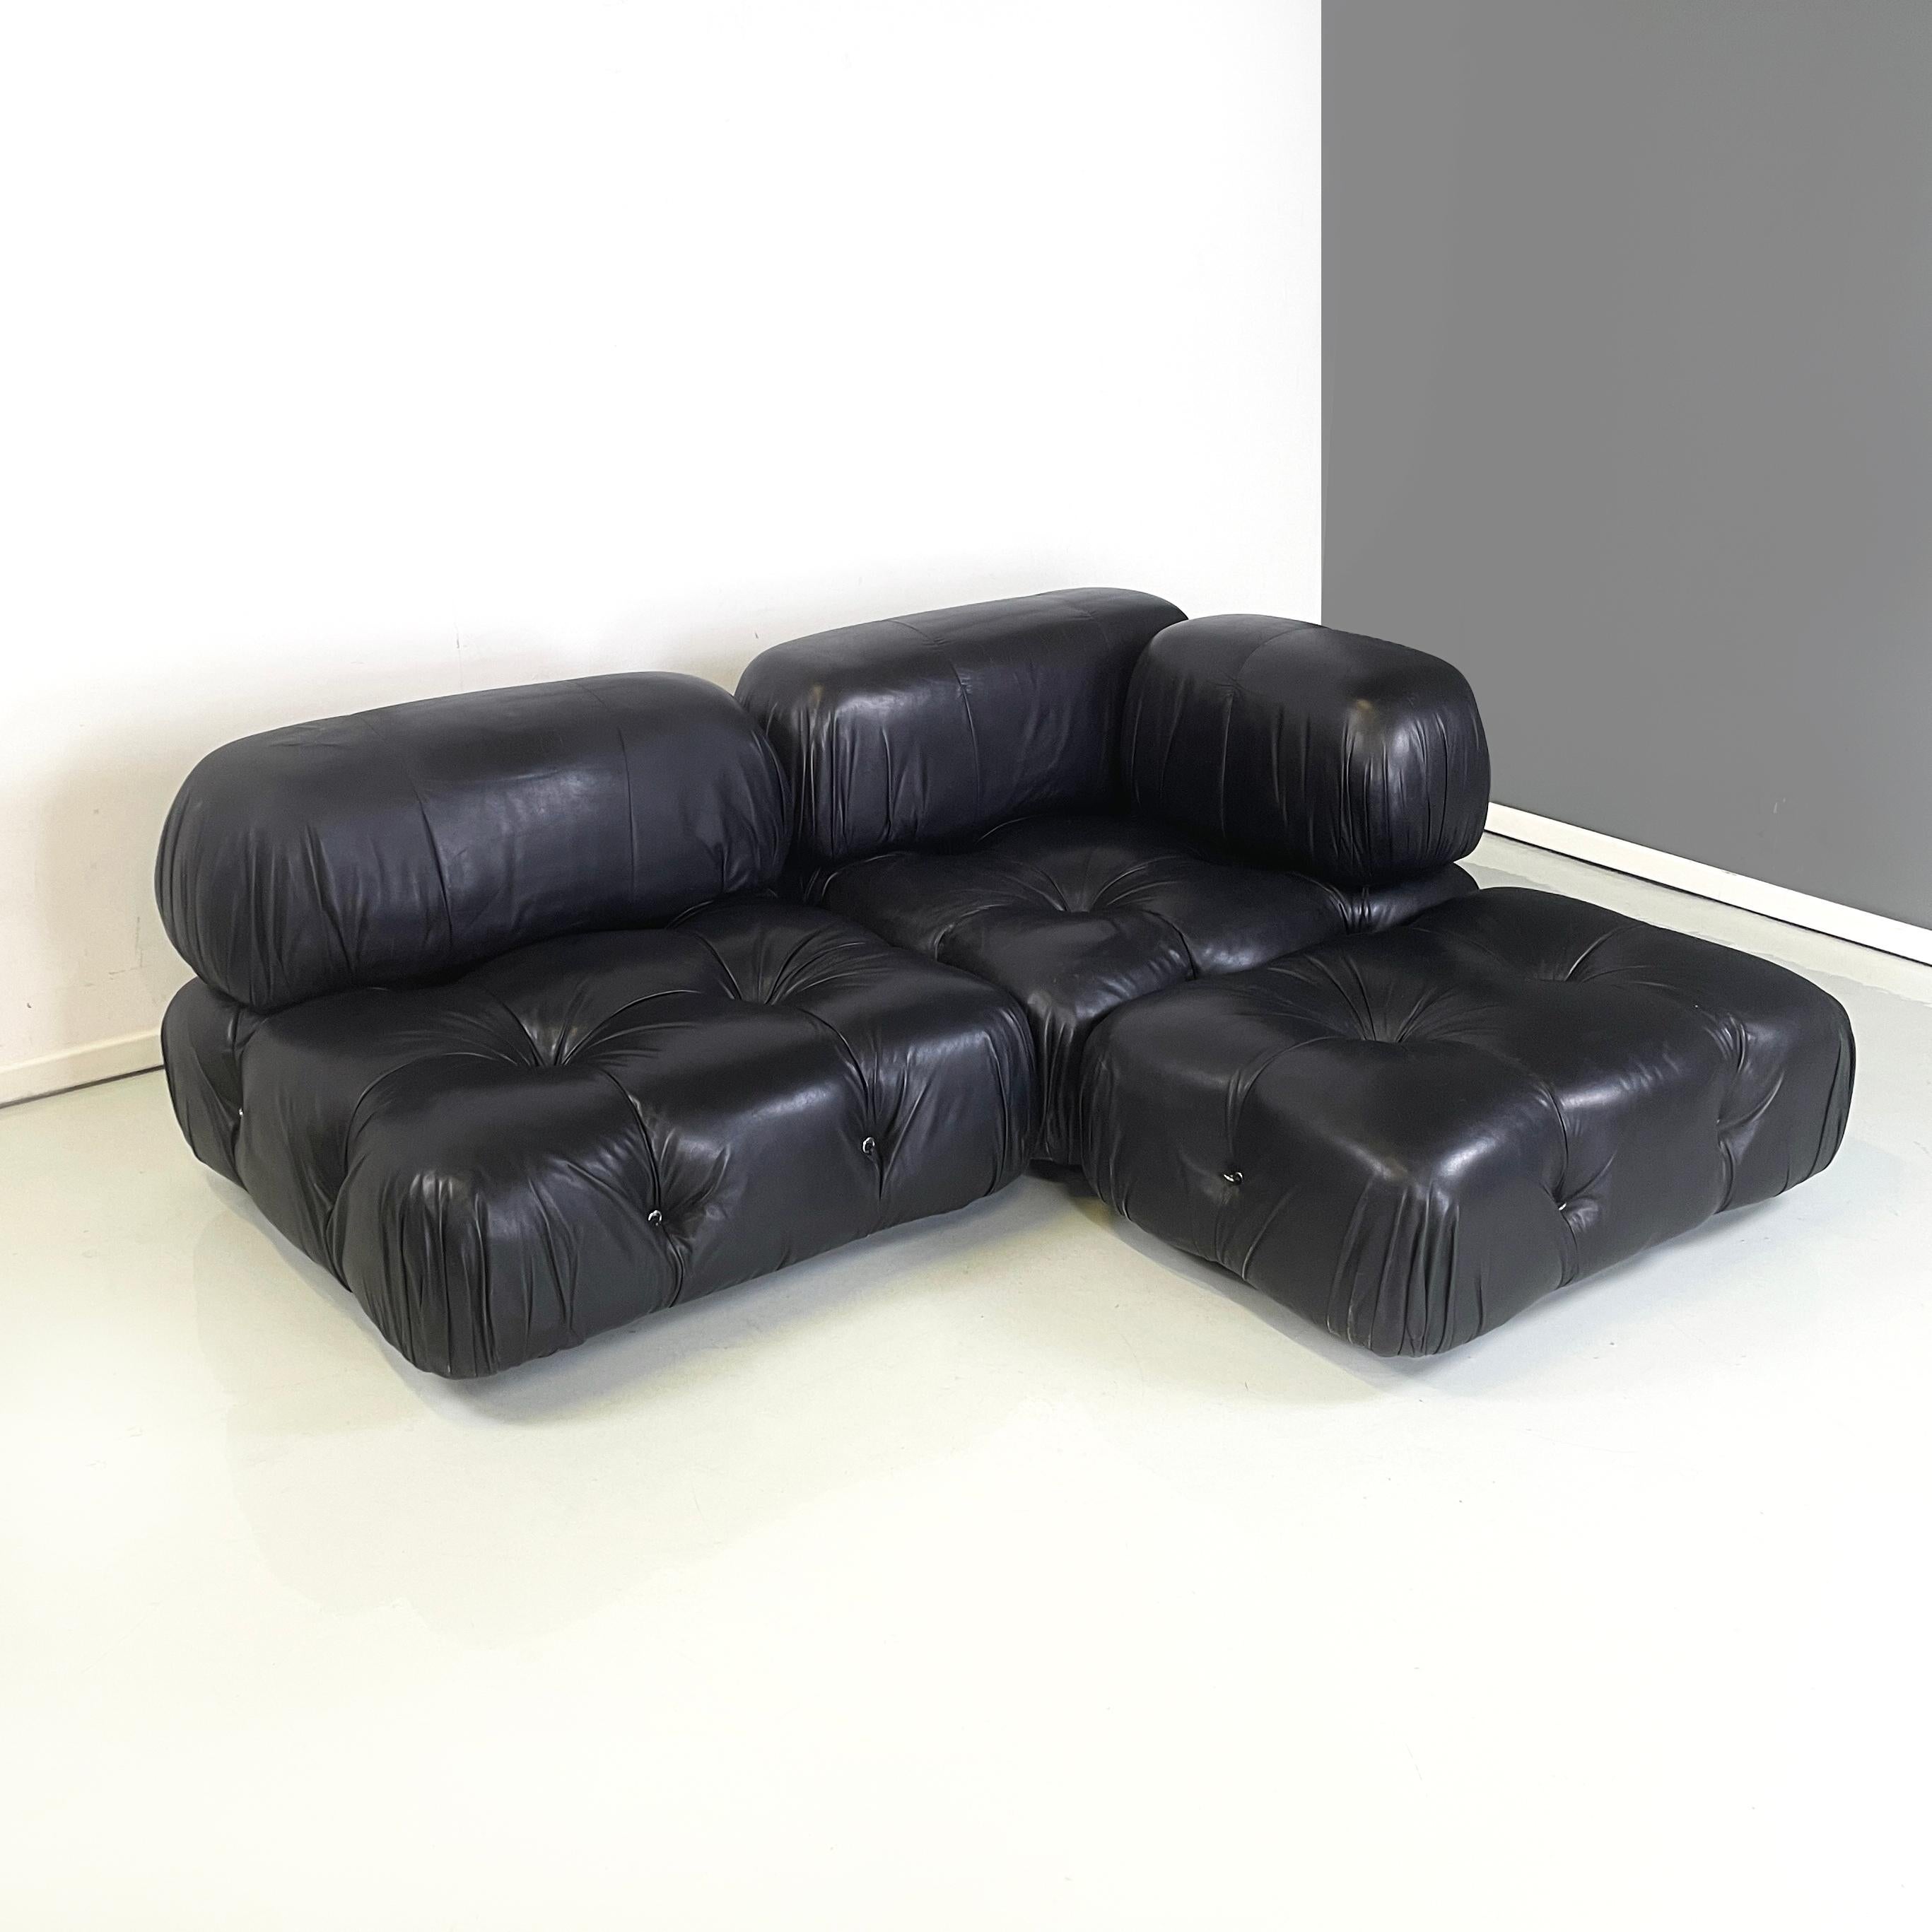 Modern Italian modern Black leather modular sofa Camaleonda by Bellini for B&B, 1970s